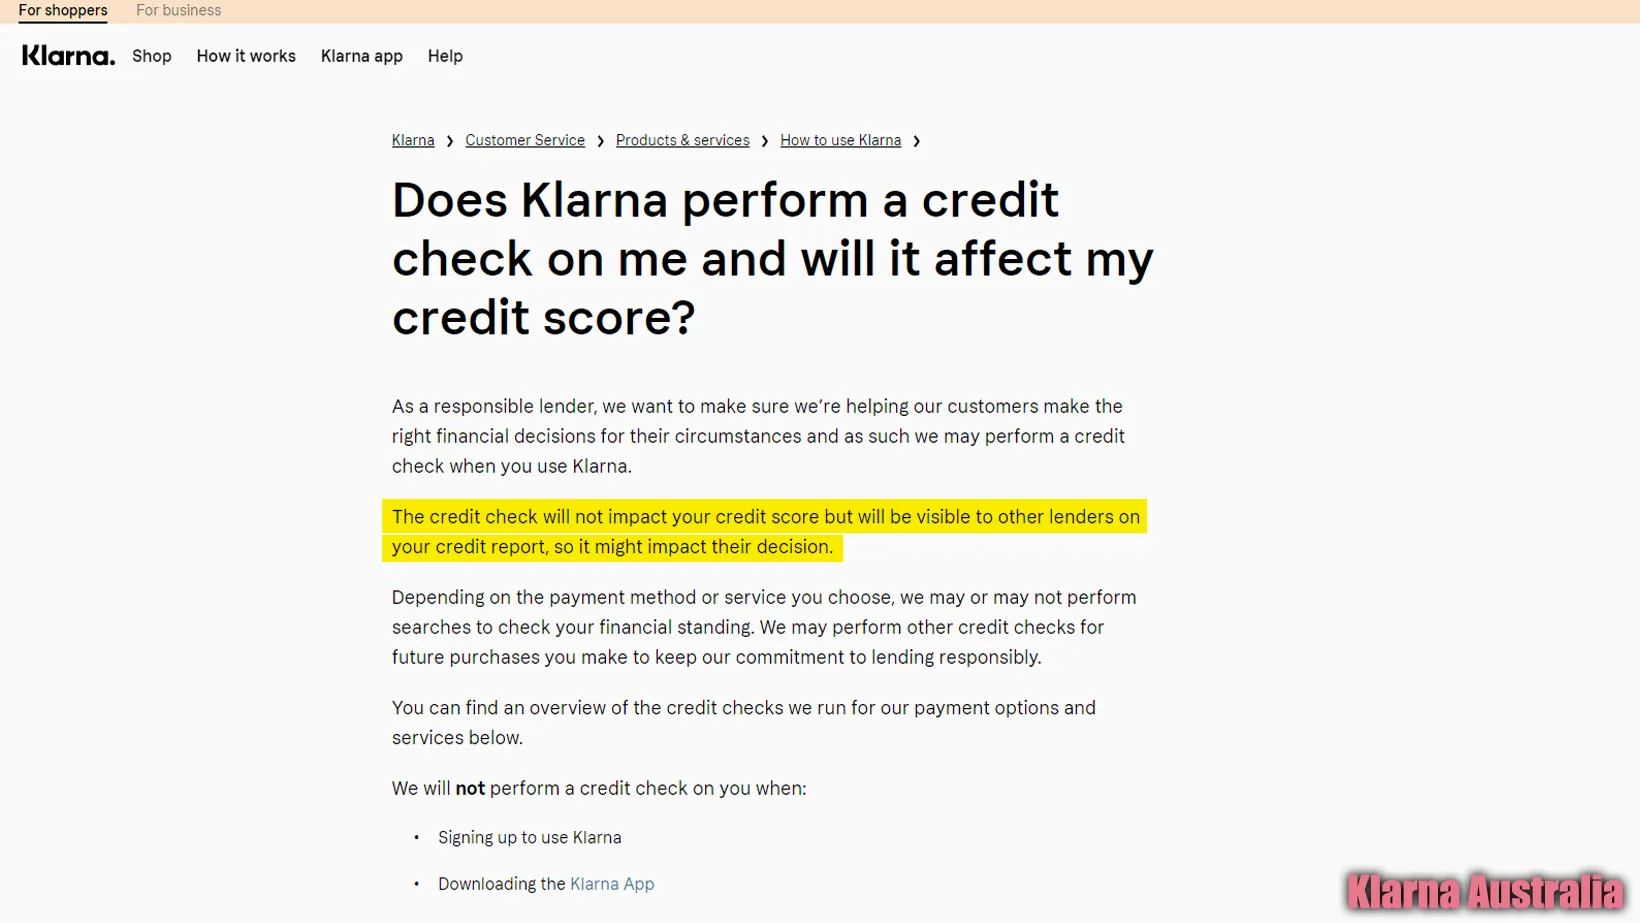 Klarna Australia on Credit Score